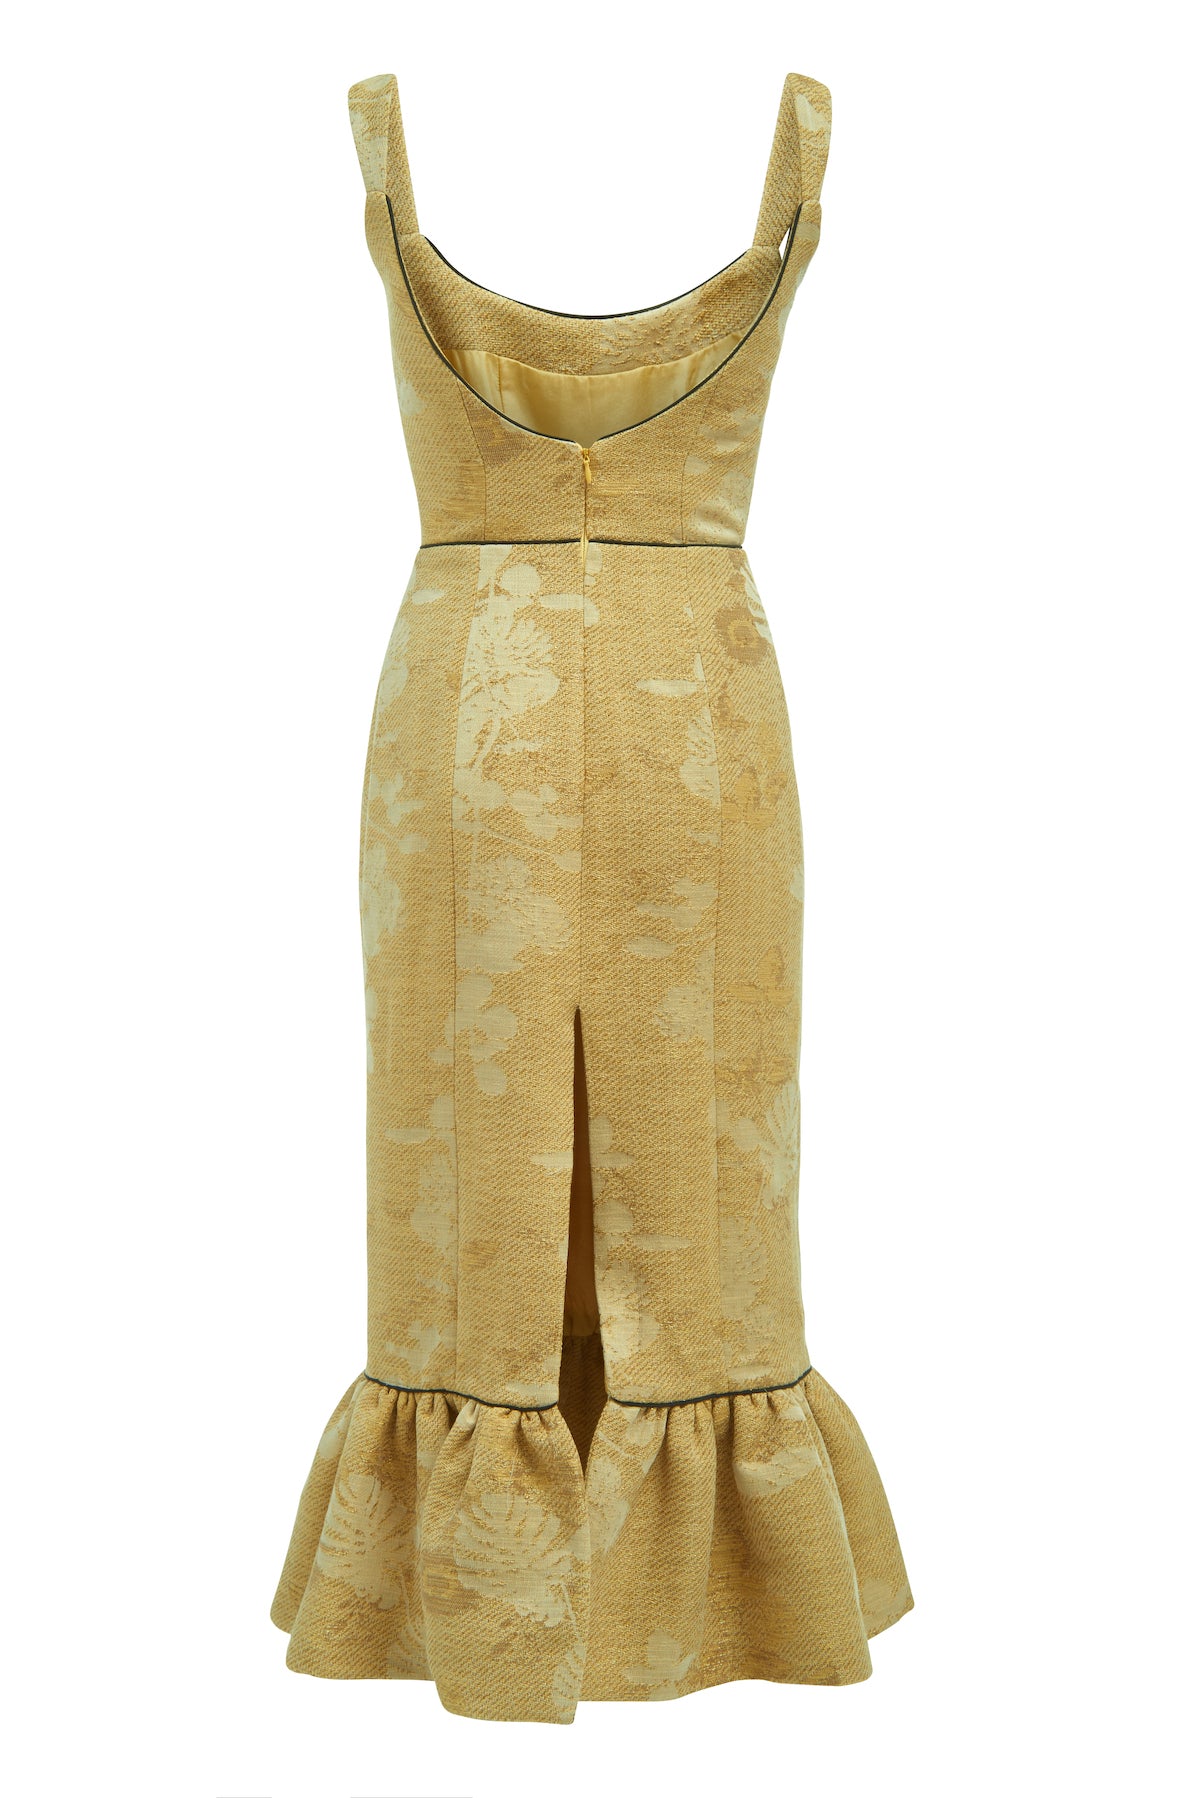 Ginevra Gold Floral Brocade Corset Dress